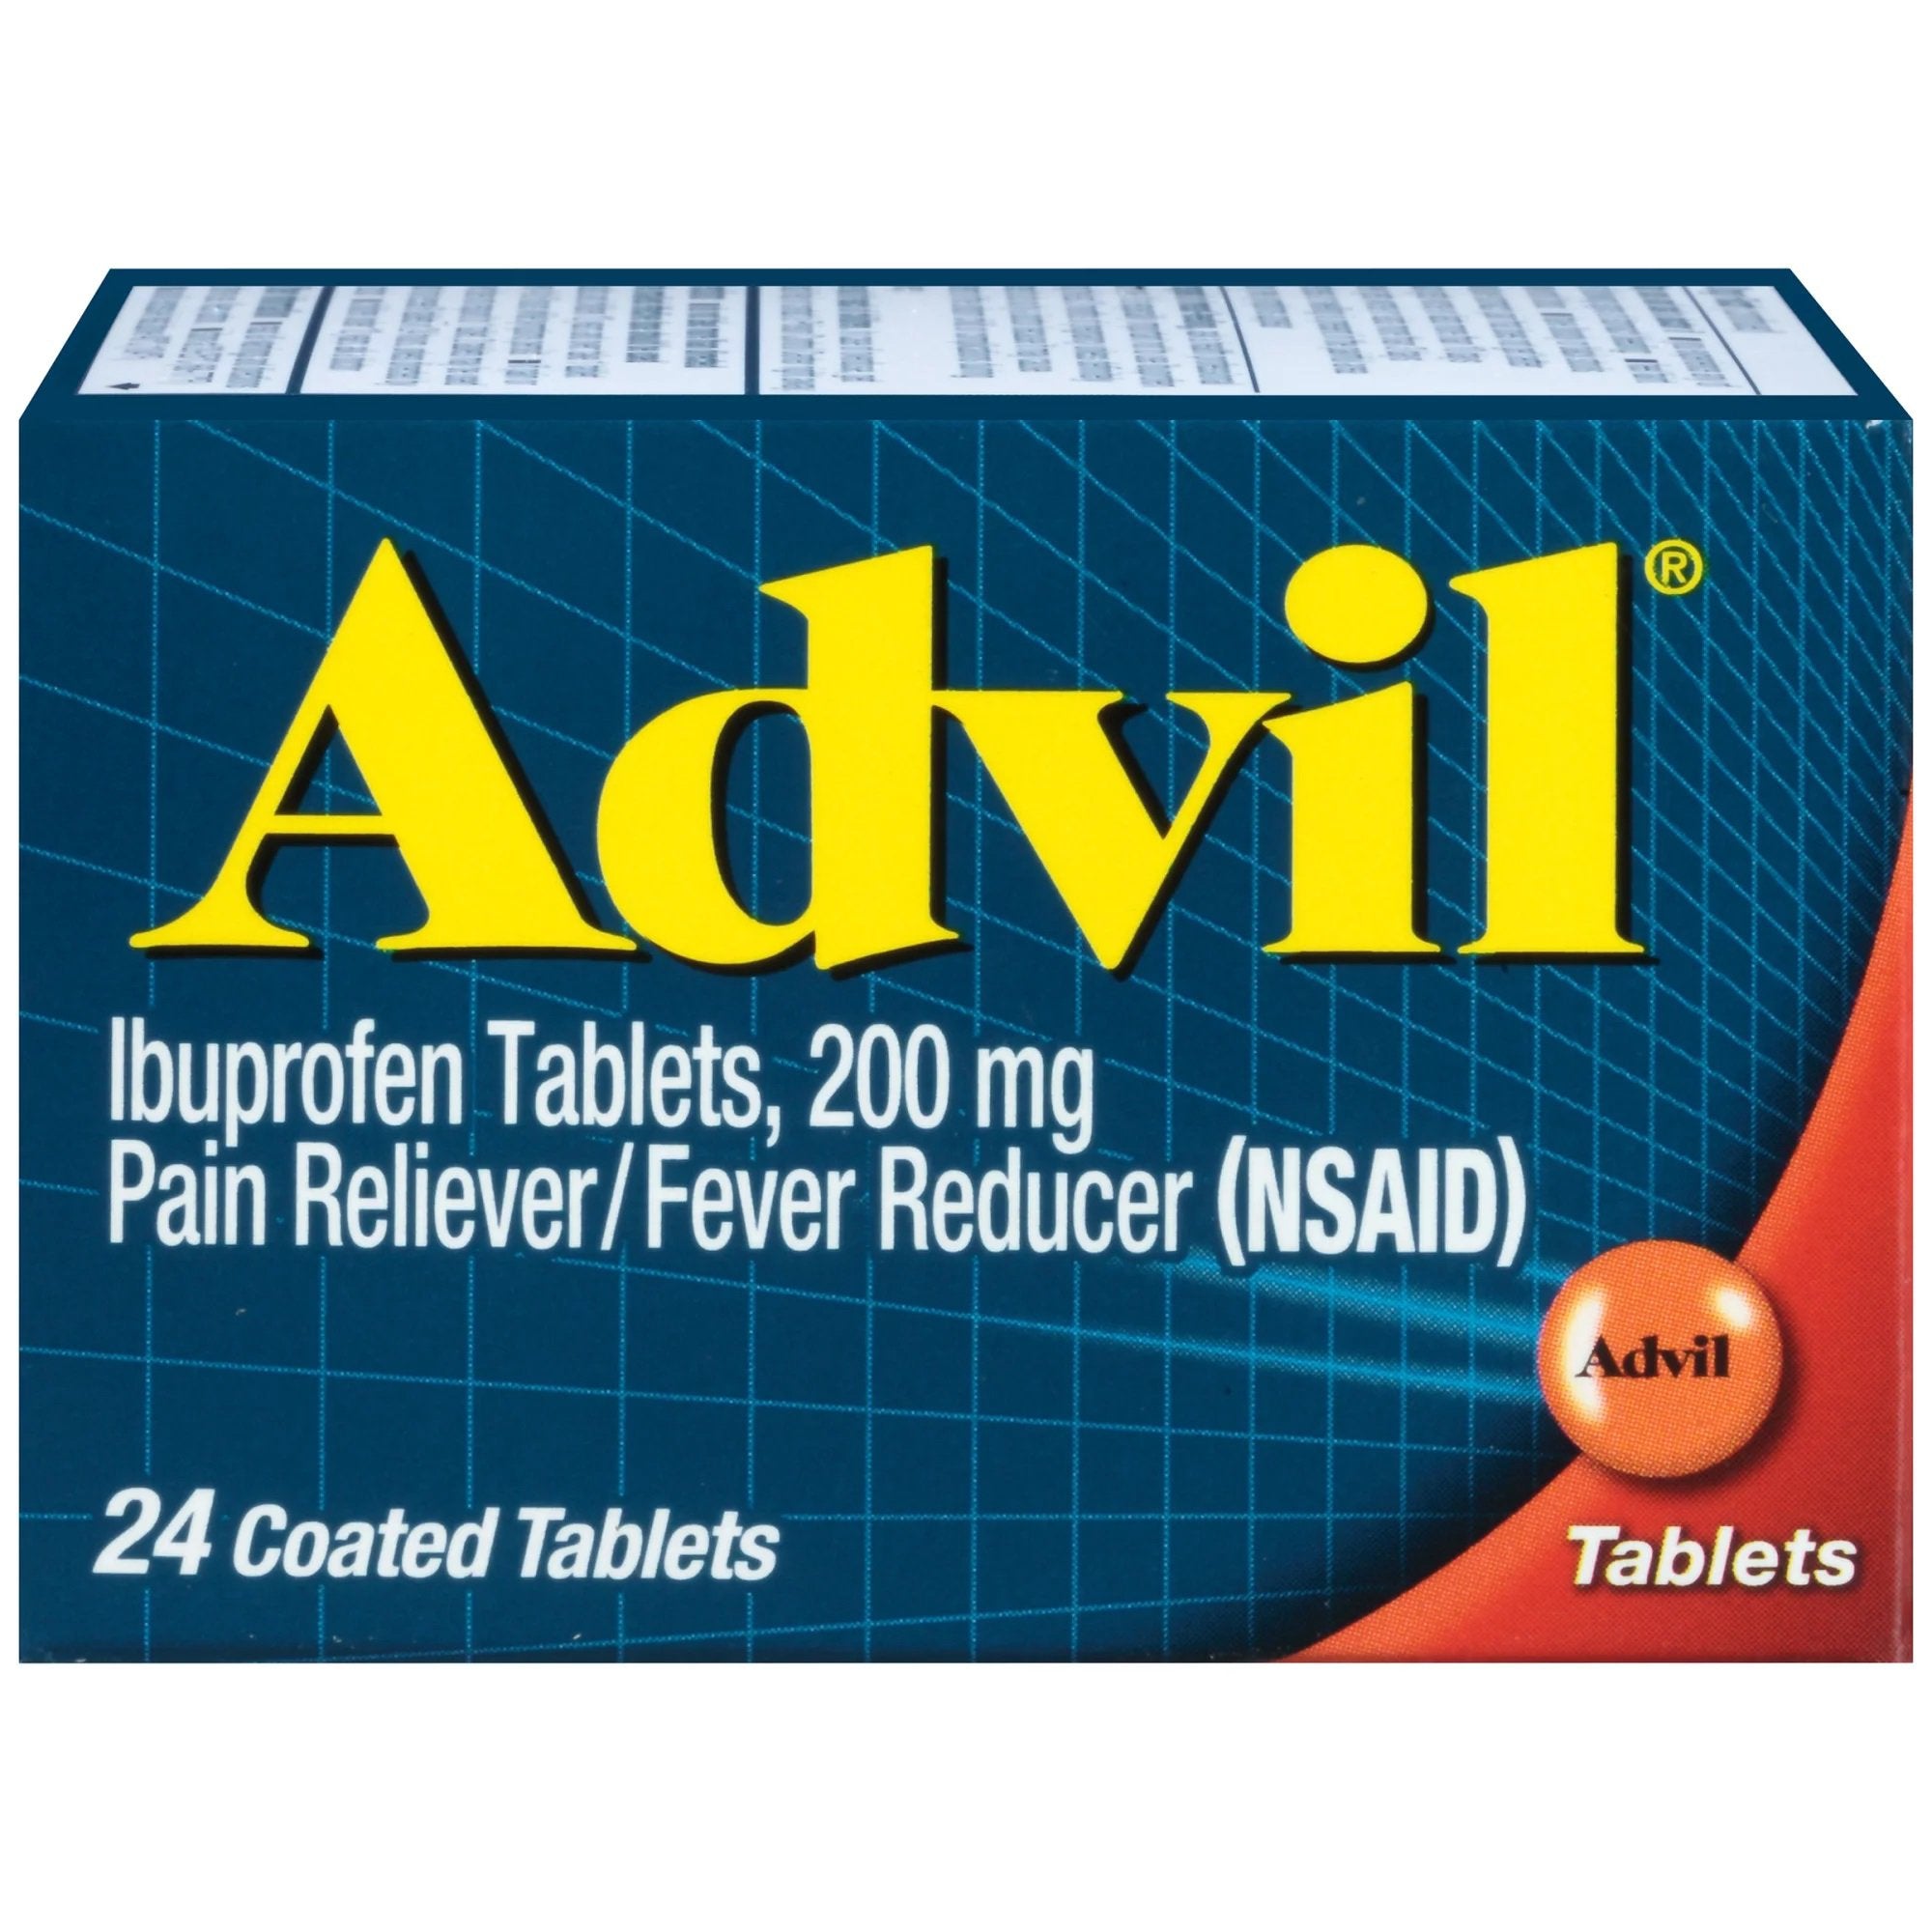 Pain Relief Advil 200 mg Strength Ibuprofen Tablet 24 per Box